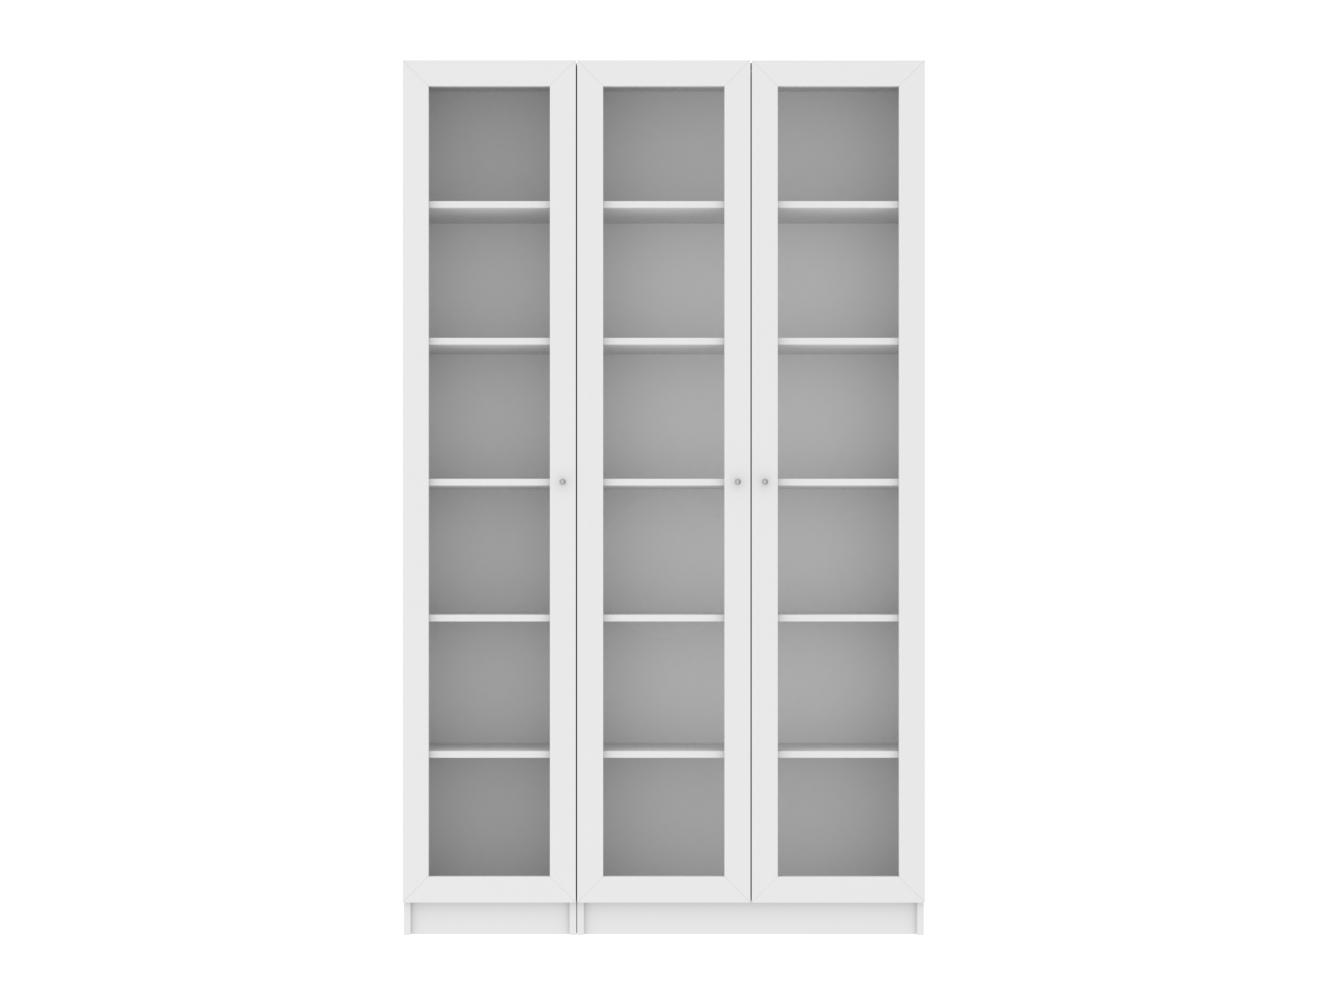  Книжный шкаф Билли 340 white ИКЕА (IKEA) изображение товара